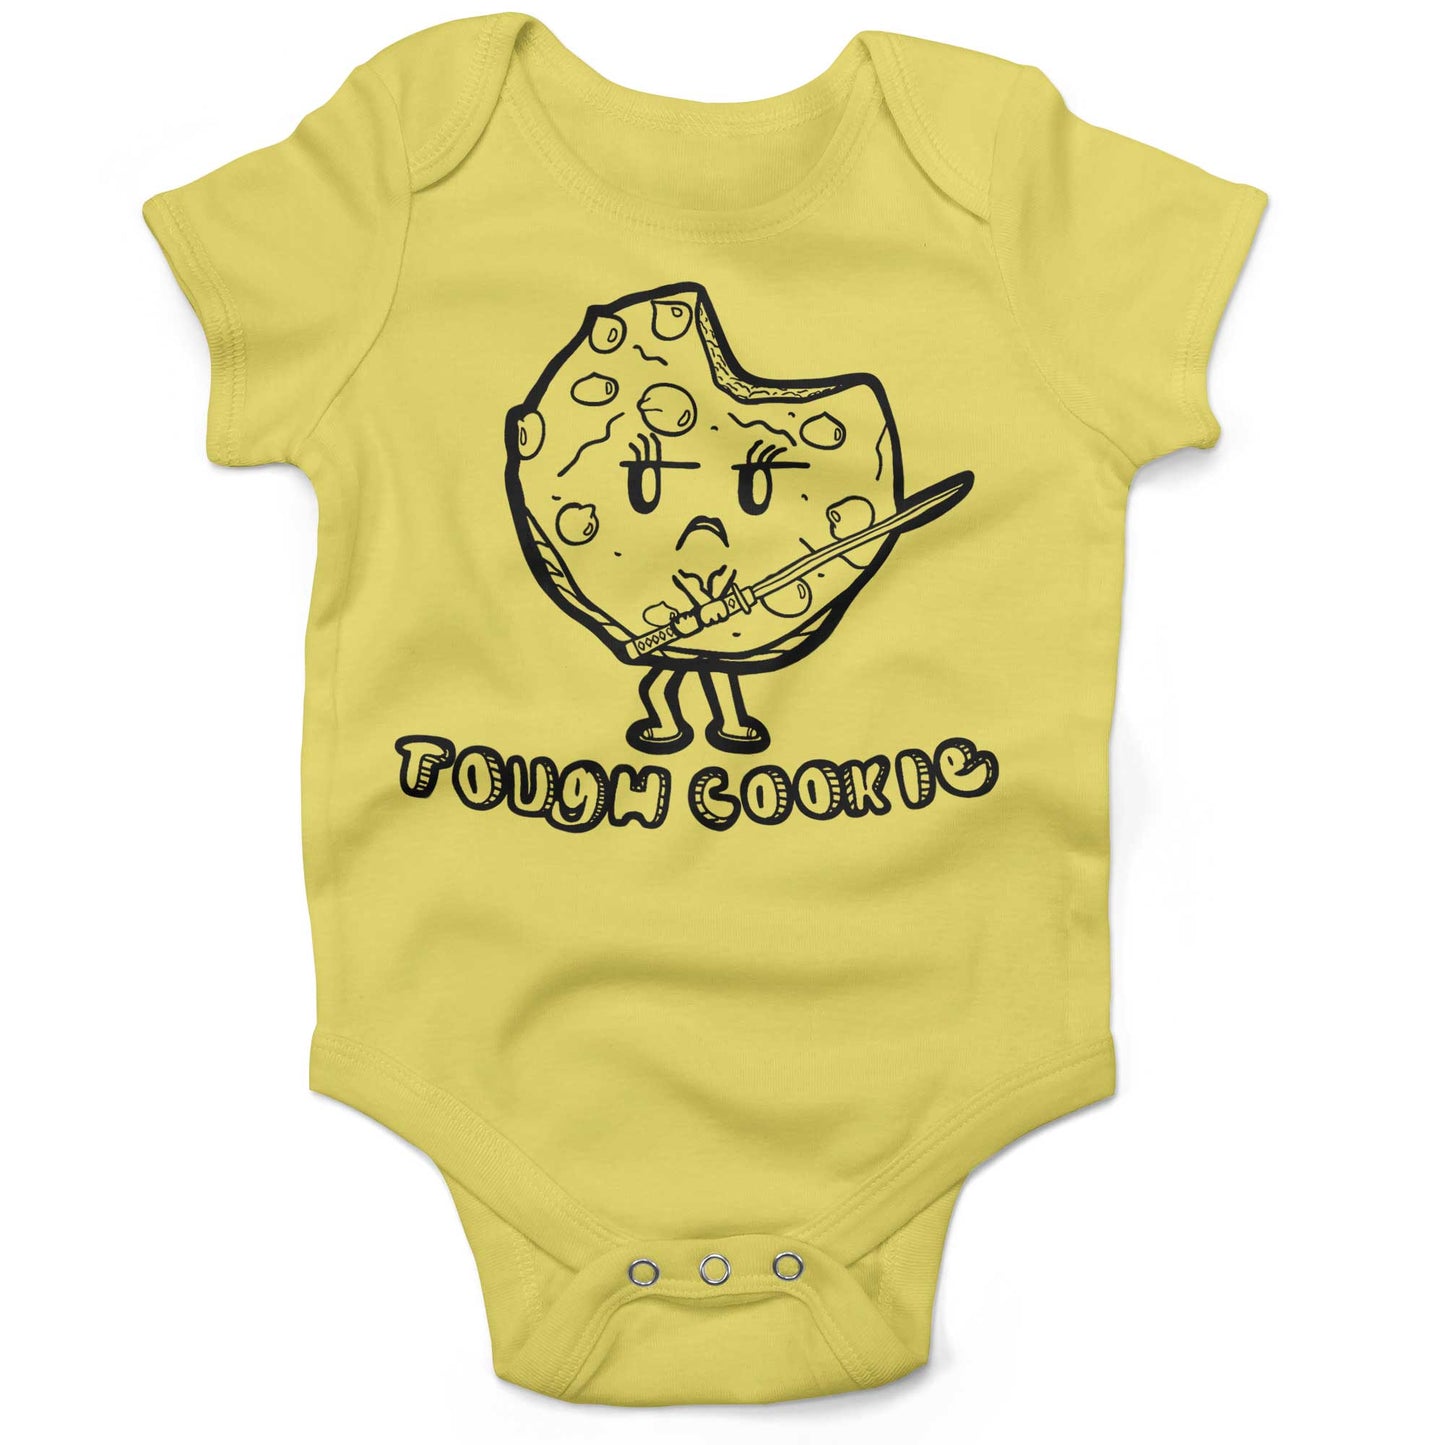 Tough Cookie Infant Bodysuit or Raglan Tee-Yellow-3-6 months